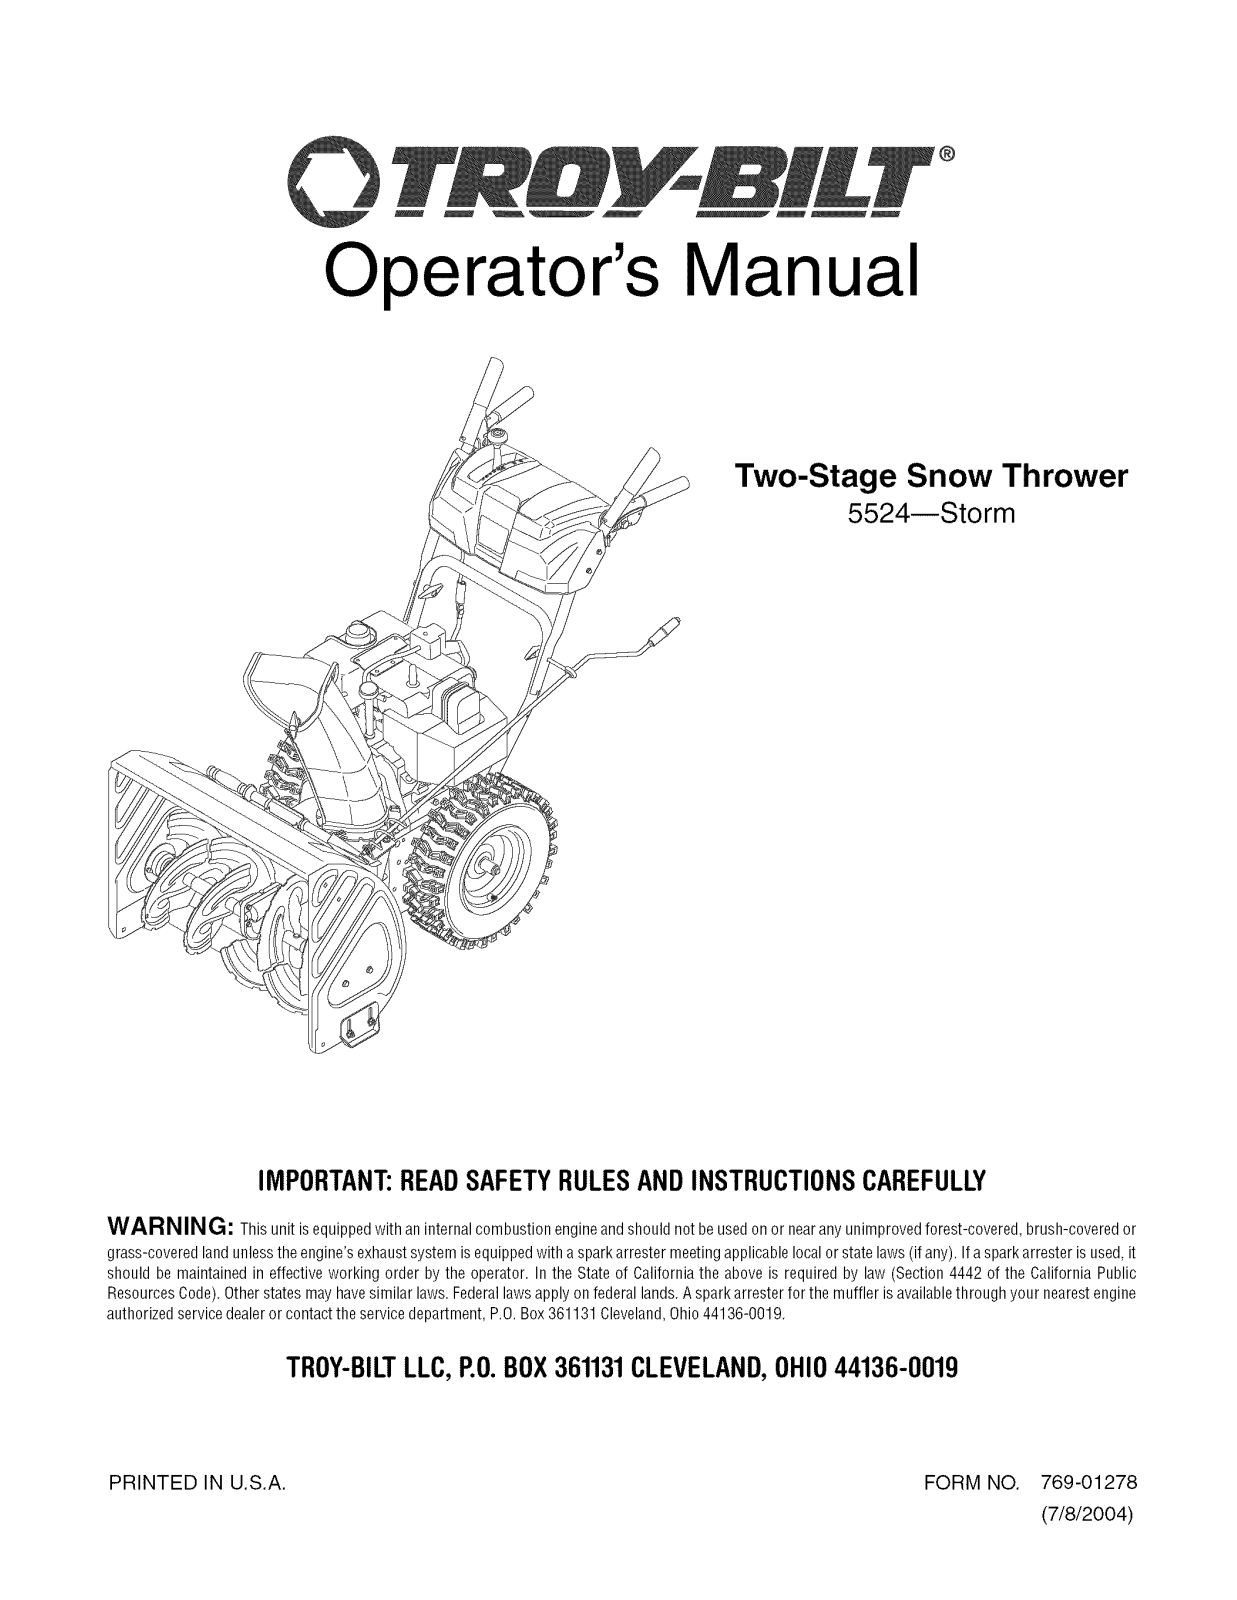 Troy-Bilt 5524-Storm Operator's Manual